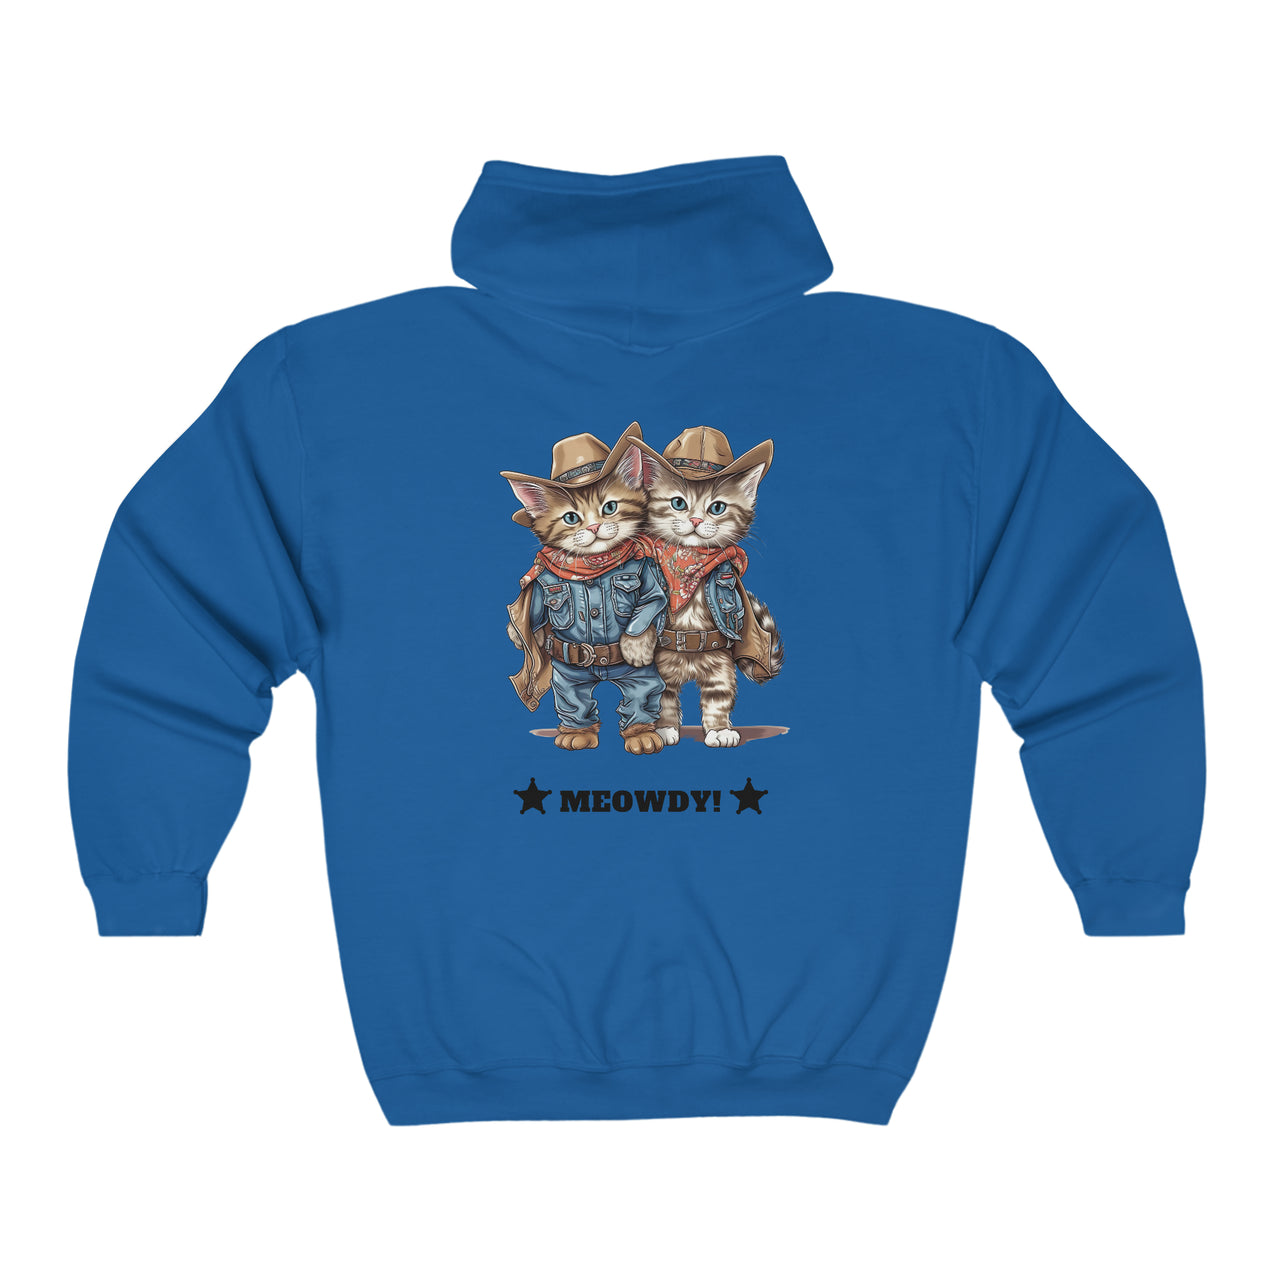 Meowdy Unisex Full Zip Hooded Sweatshirt Kittens Dressed as Cowboys-Royal Blue-Back